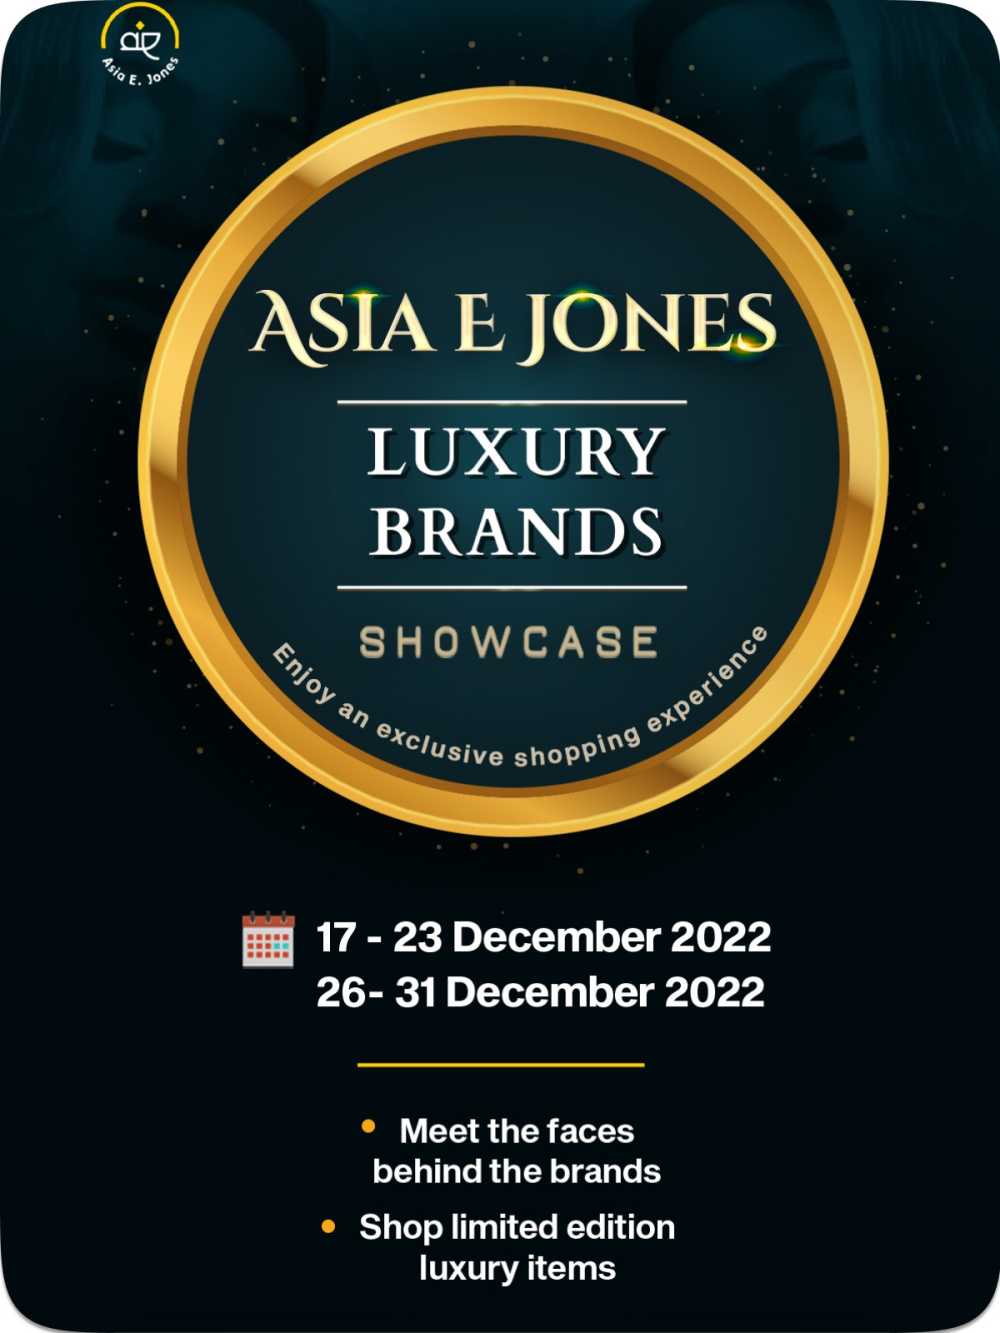 Asia E Jones Luxuy Brands showcase at Livat